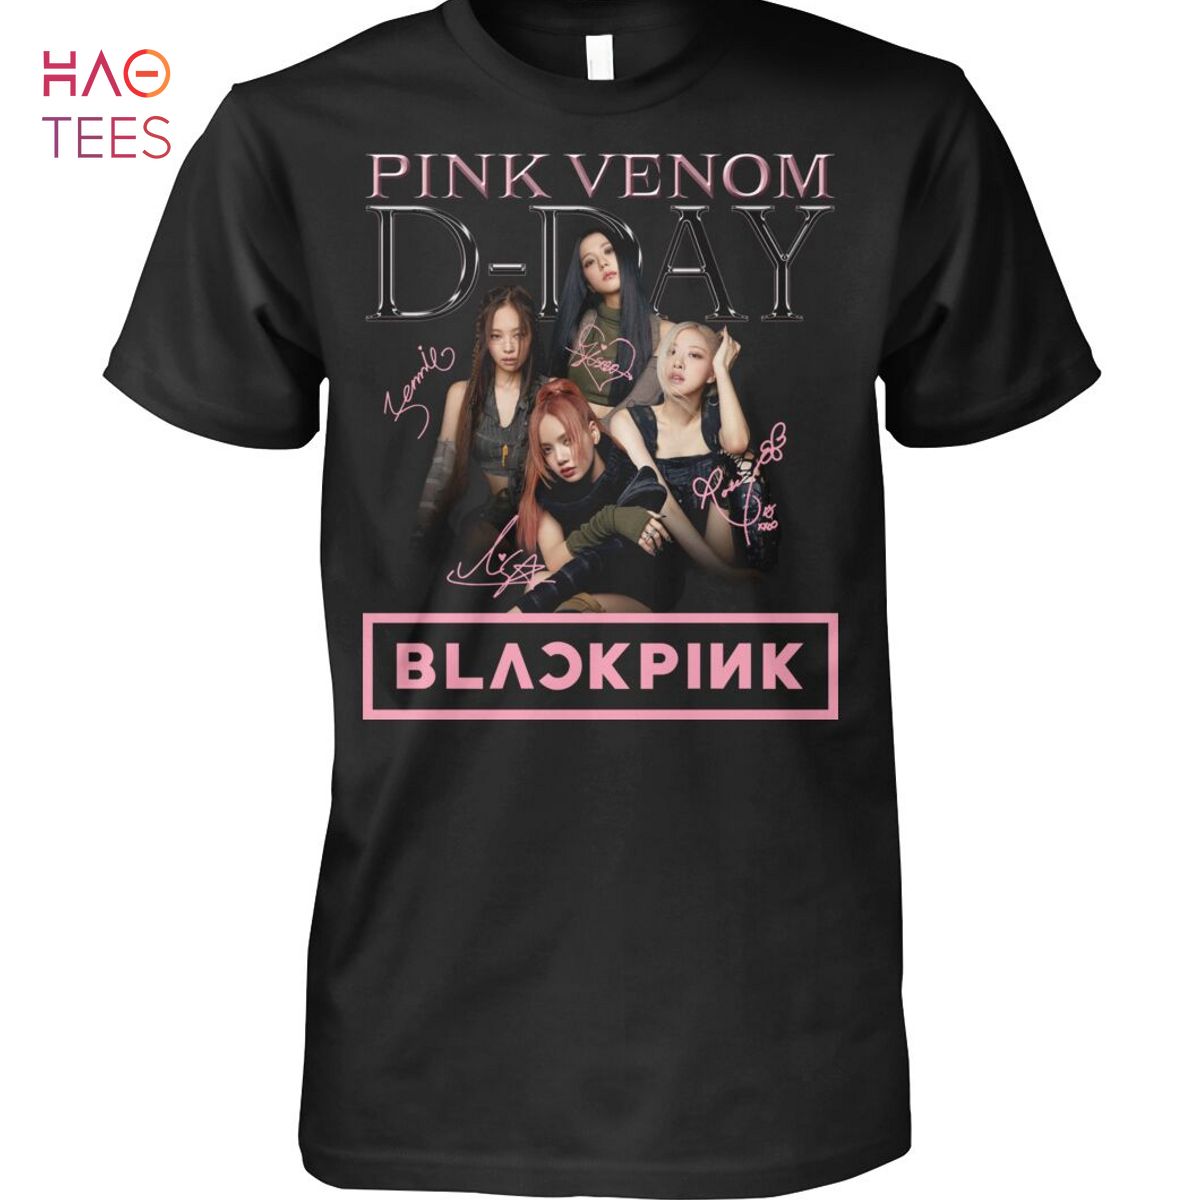 HOT Pink Venom D-Day BlackPink Shirt